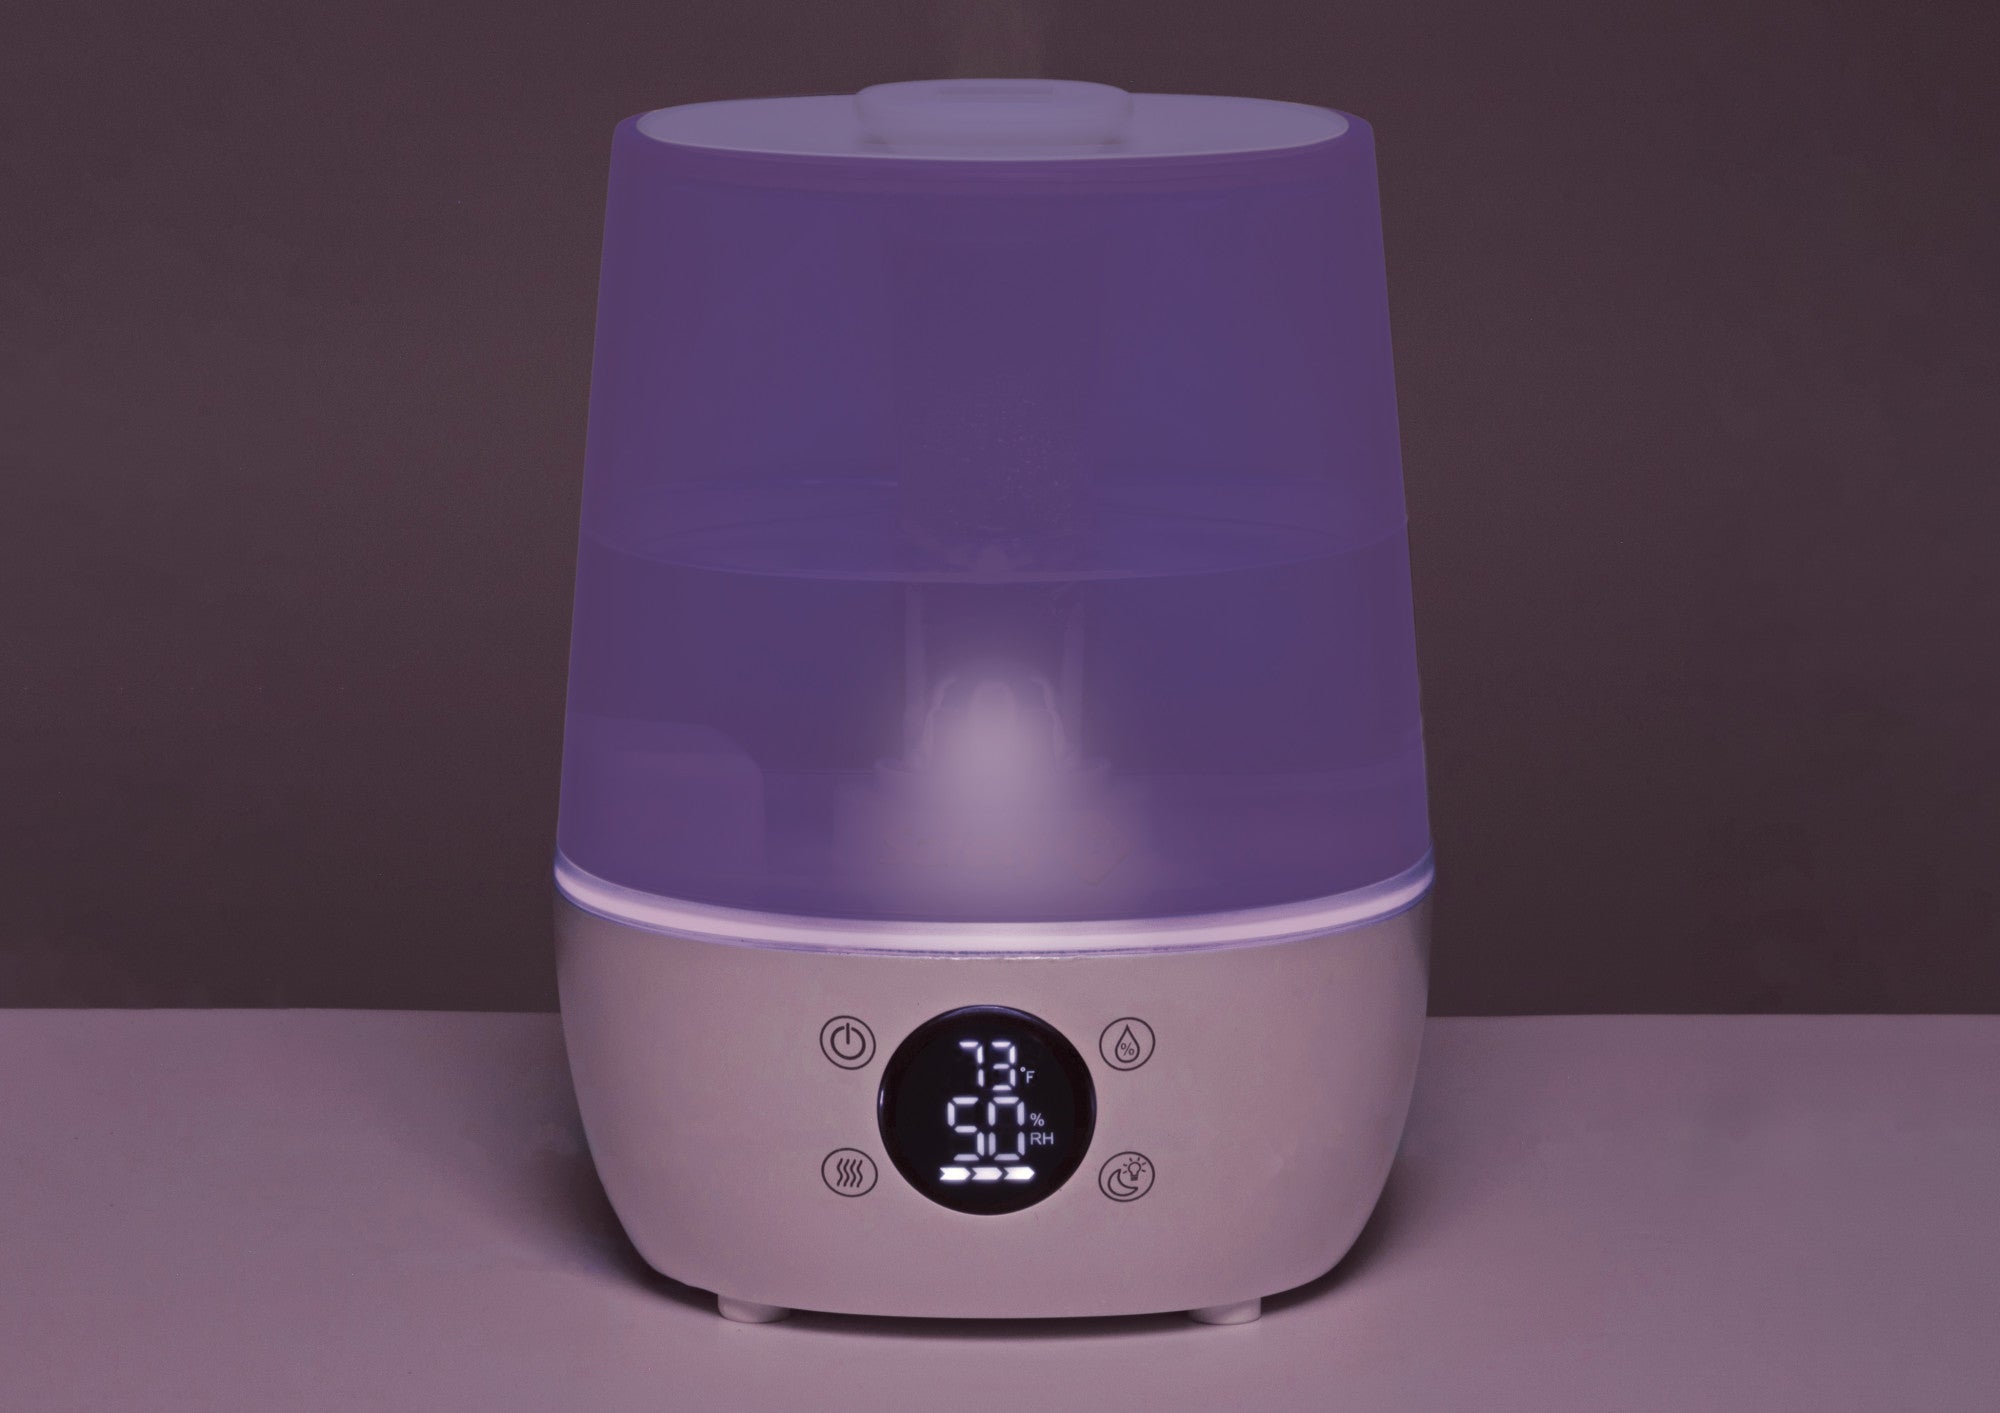 Humid Control Filter Free Humidifier - purple nightlight